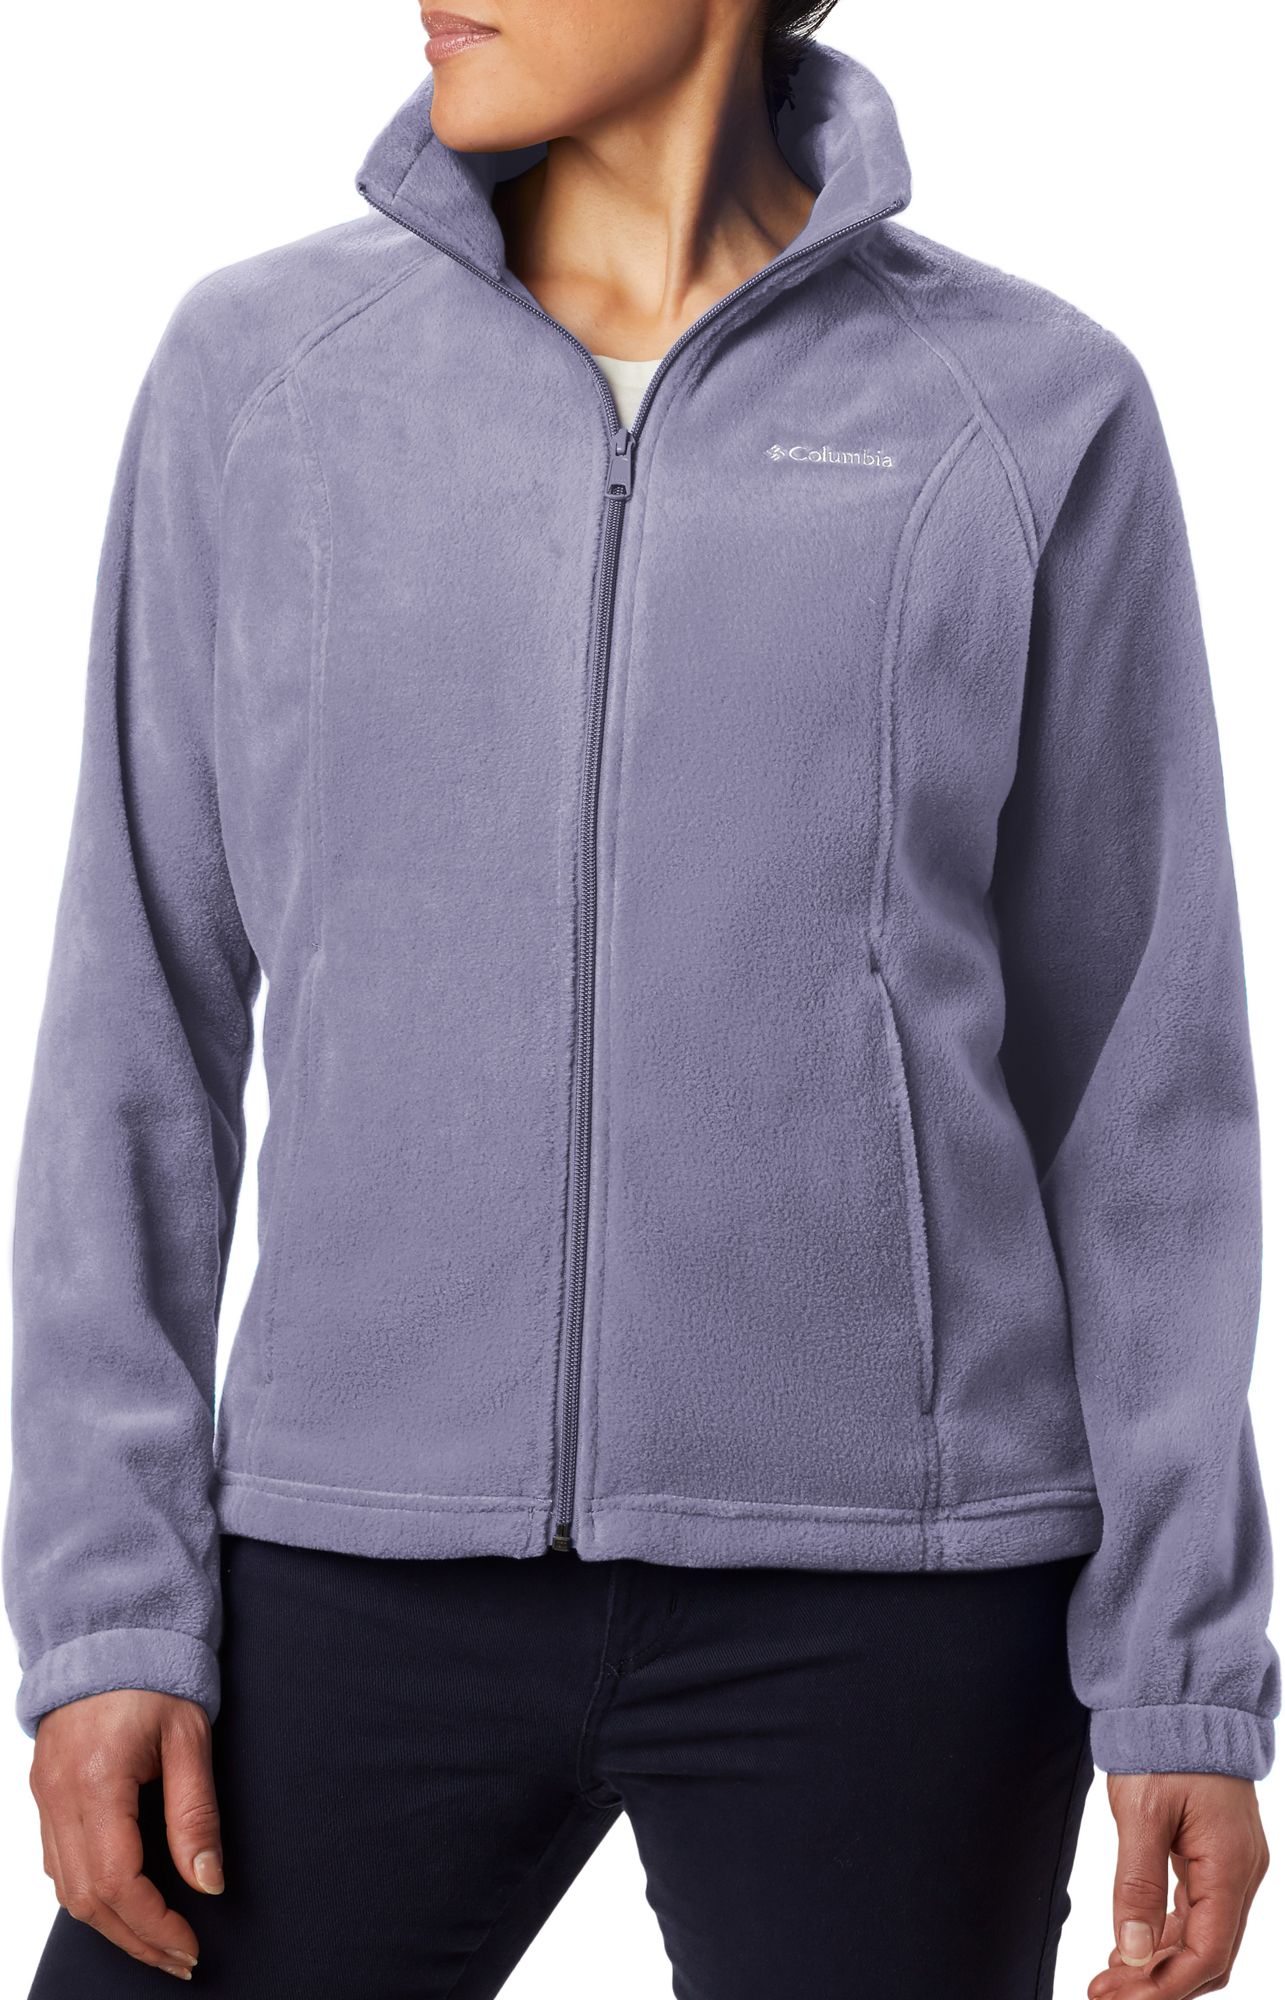 mckenzie essential zip through hoodie